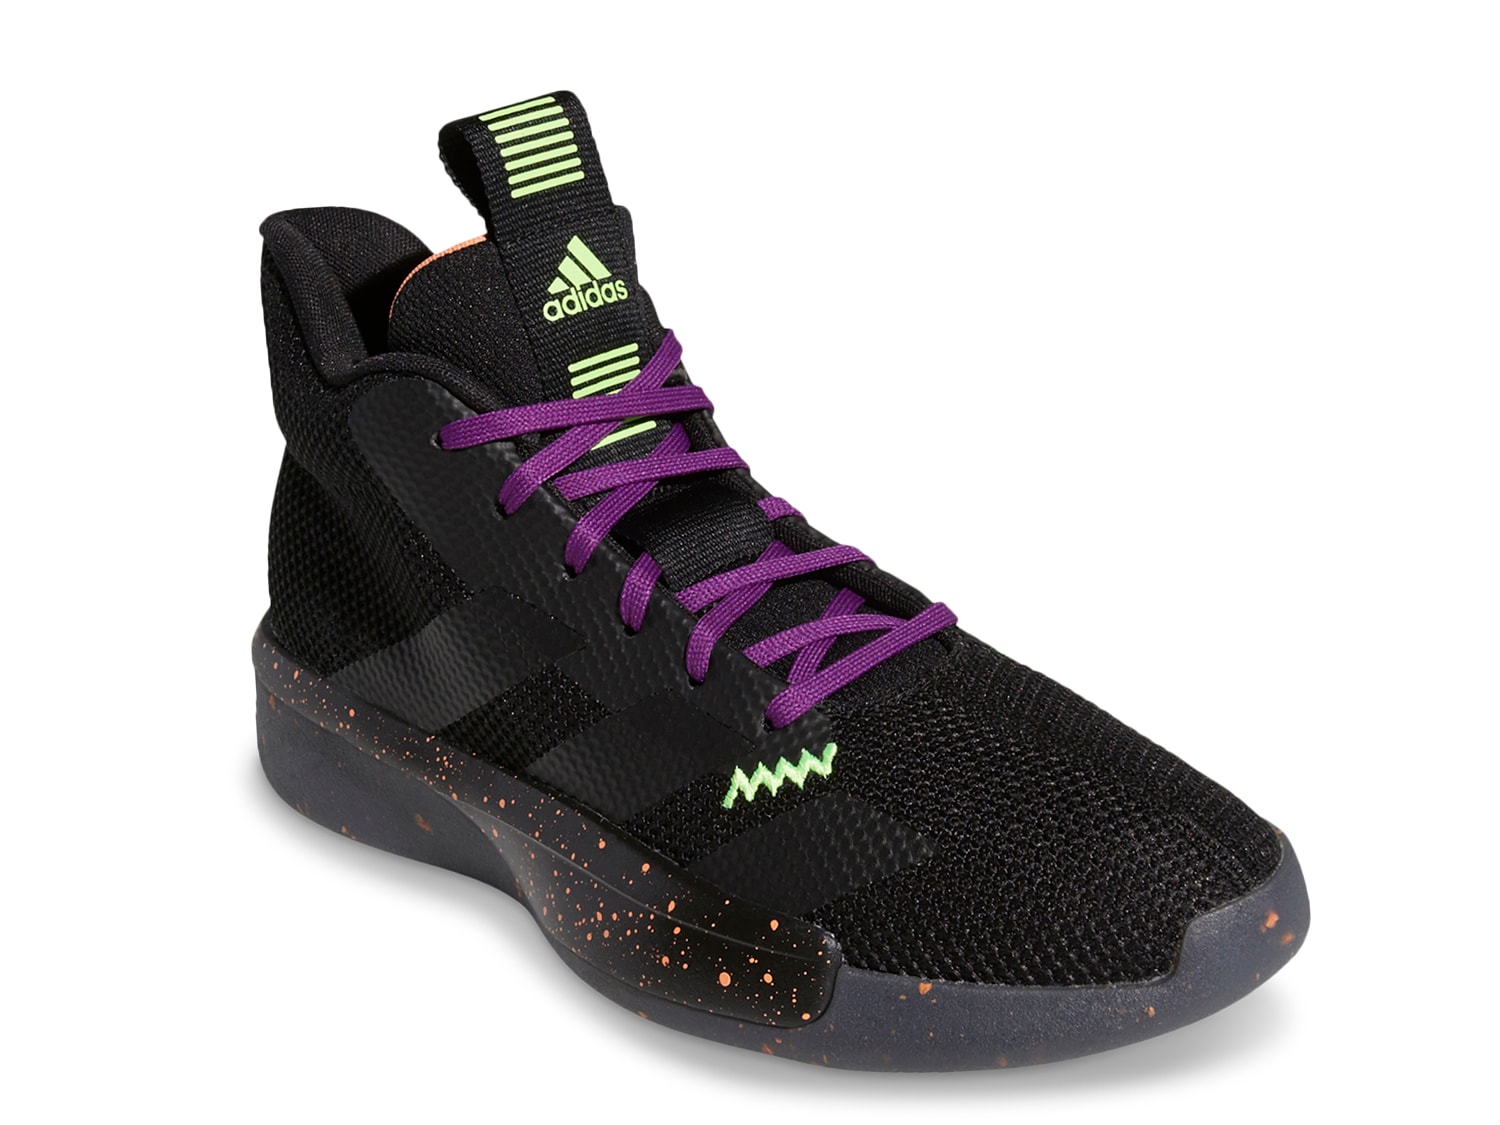 adidas men's pro next 2019 basketball shoe